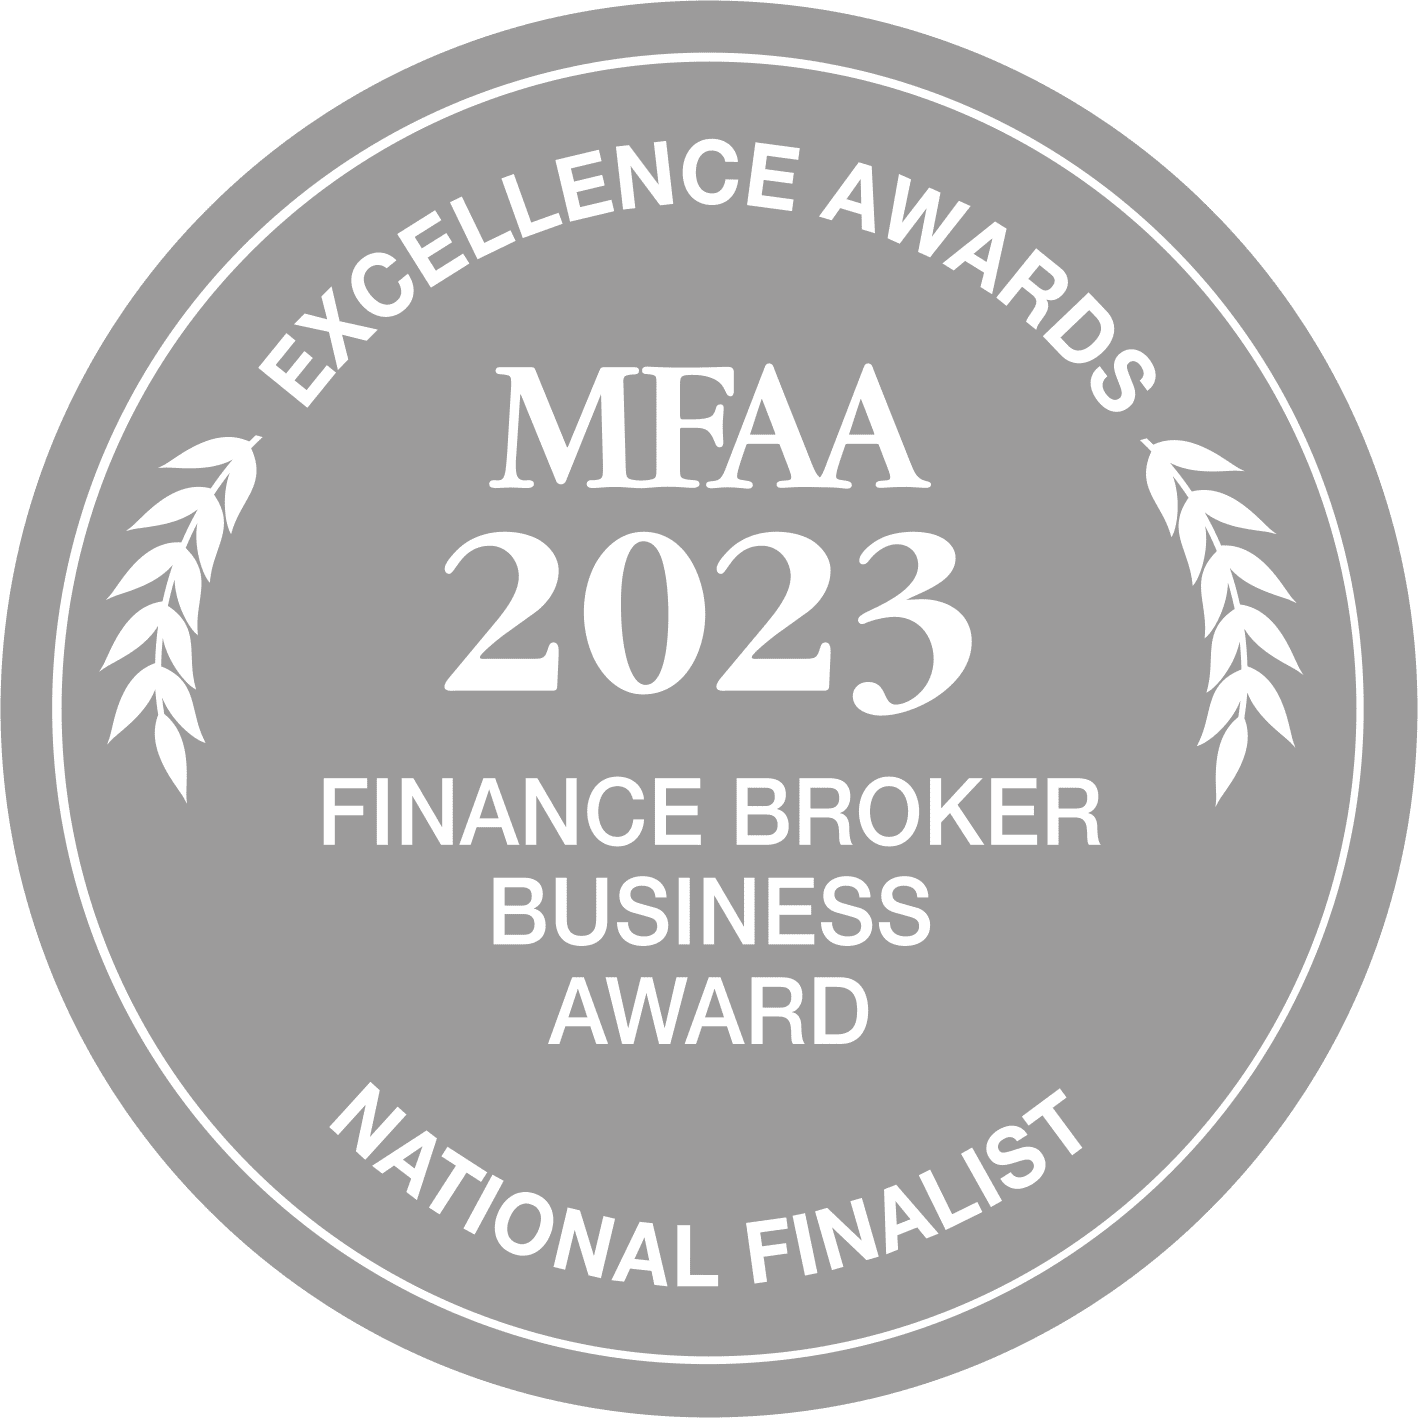 2023 MFAA - Finance Broker Business Award - National Finalist